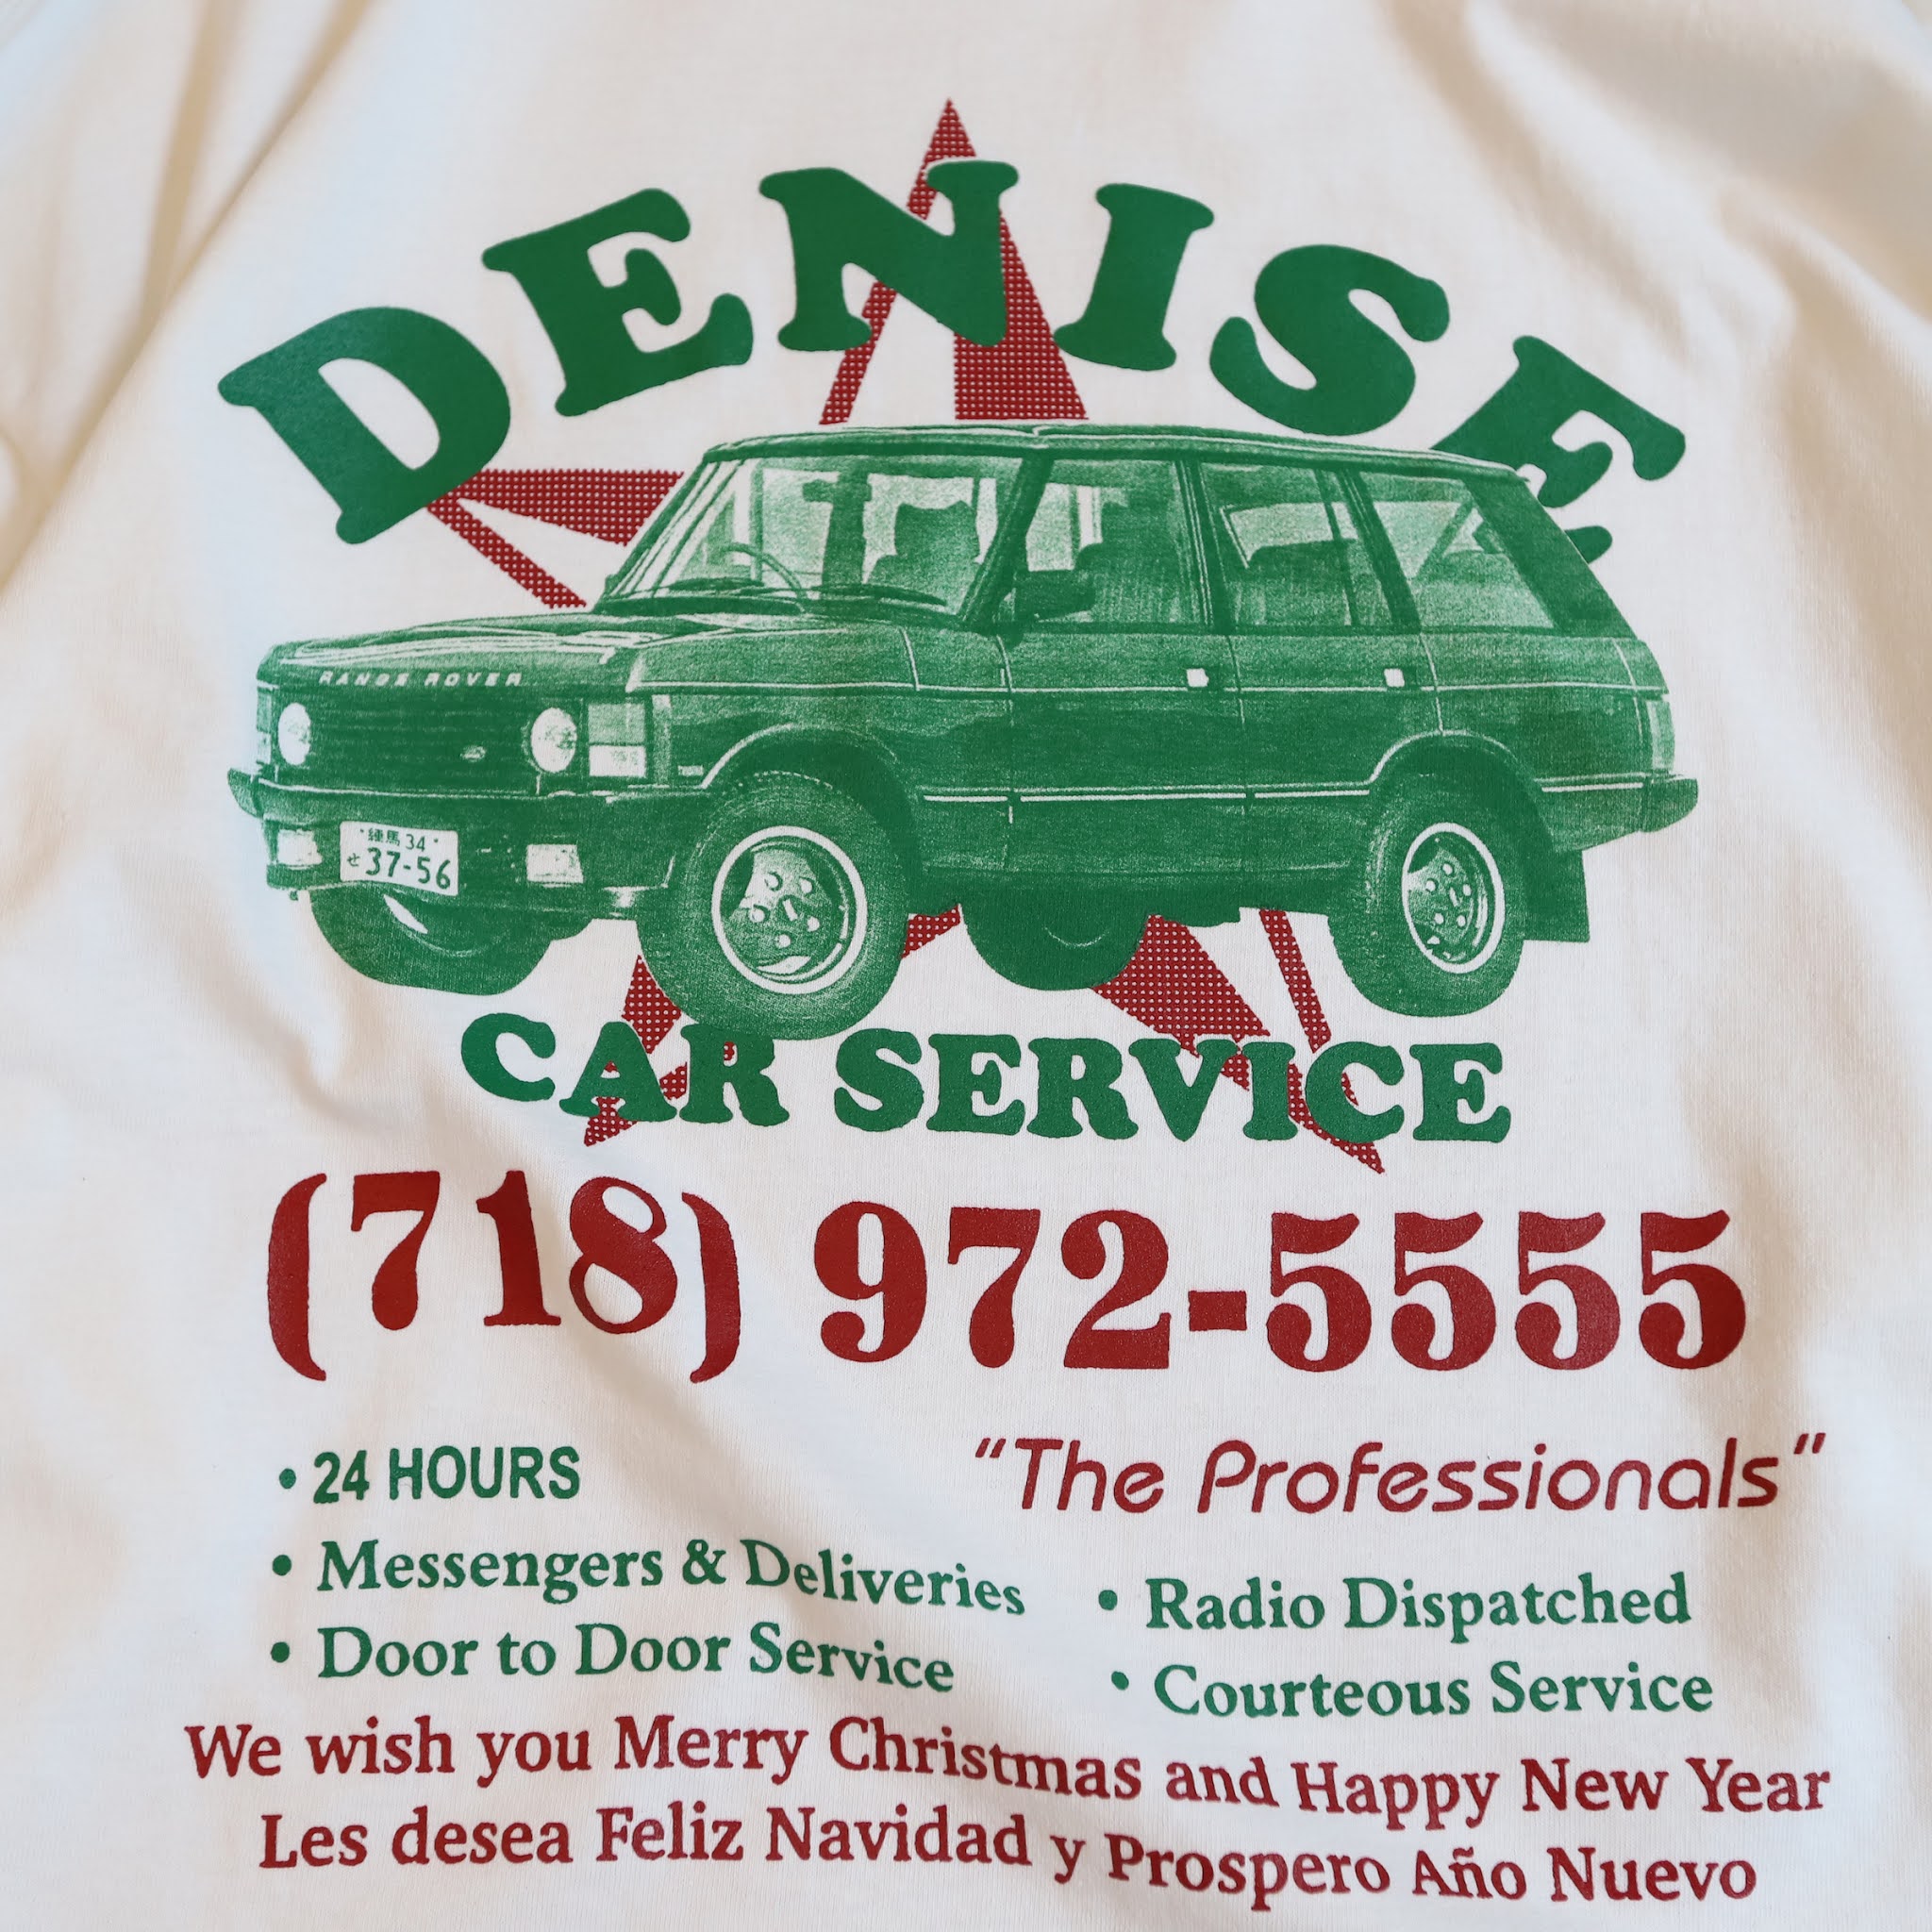 DENISE CAR SERVICE MIN-NANO 3756 L/Sメンズ